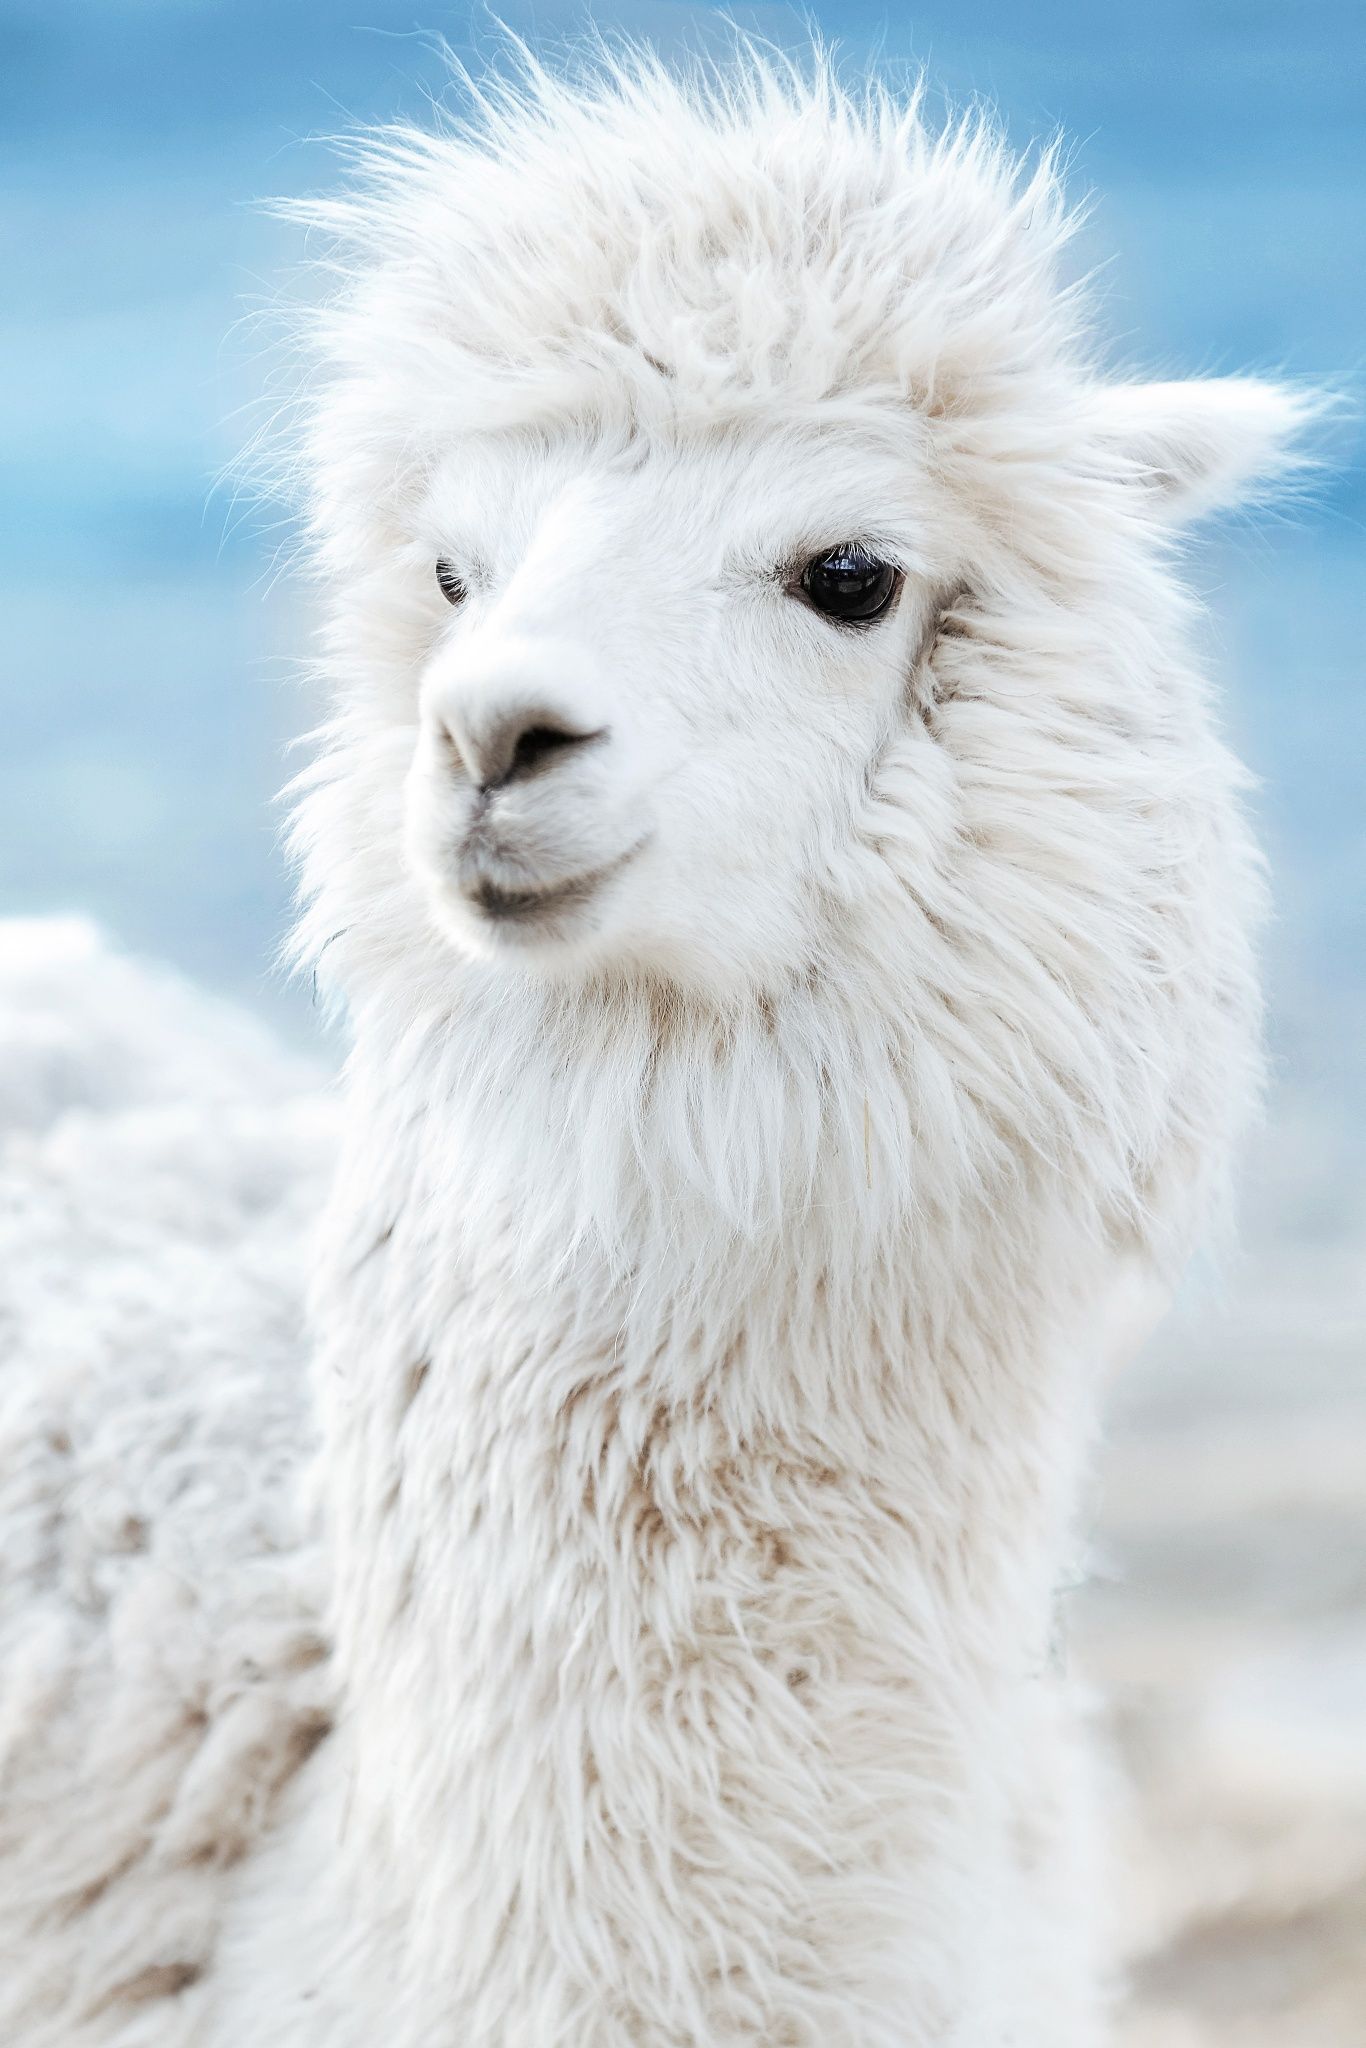 White Alpaca (x-post /r/MostBeautiful) http://ift.tt/2vf2SxJ | Sheep ...